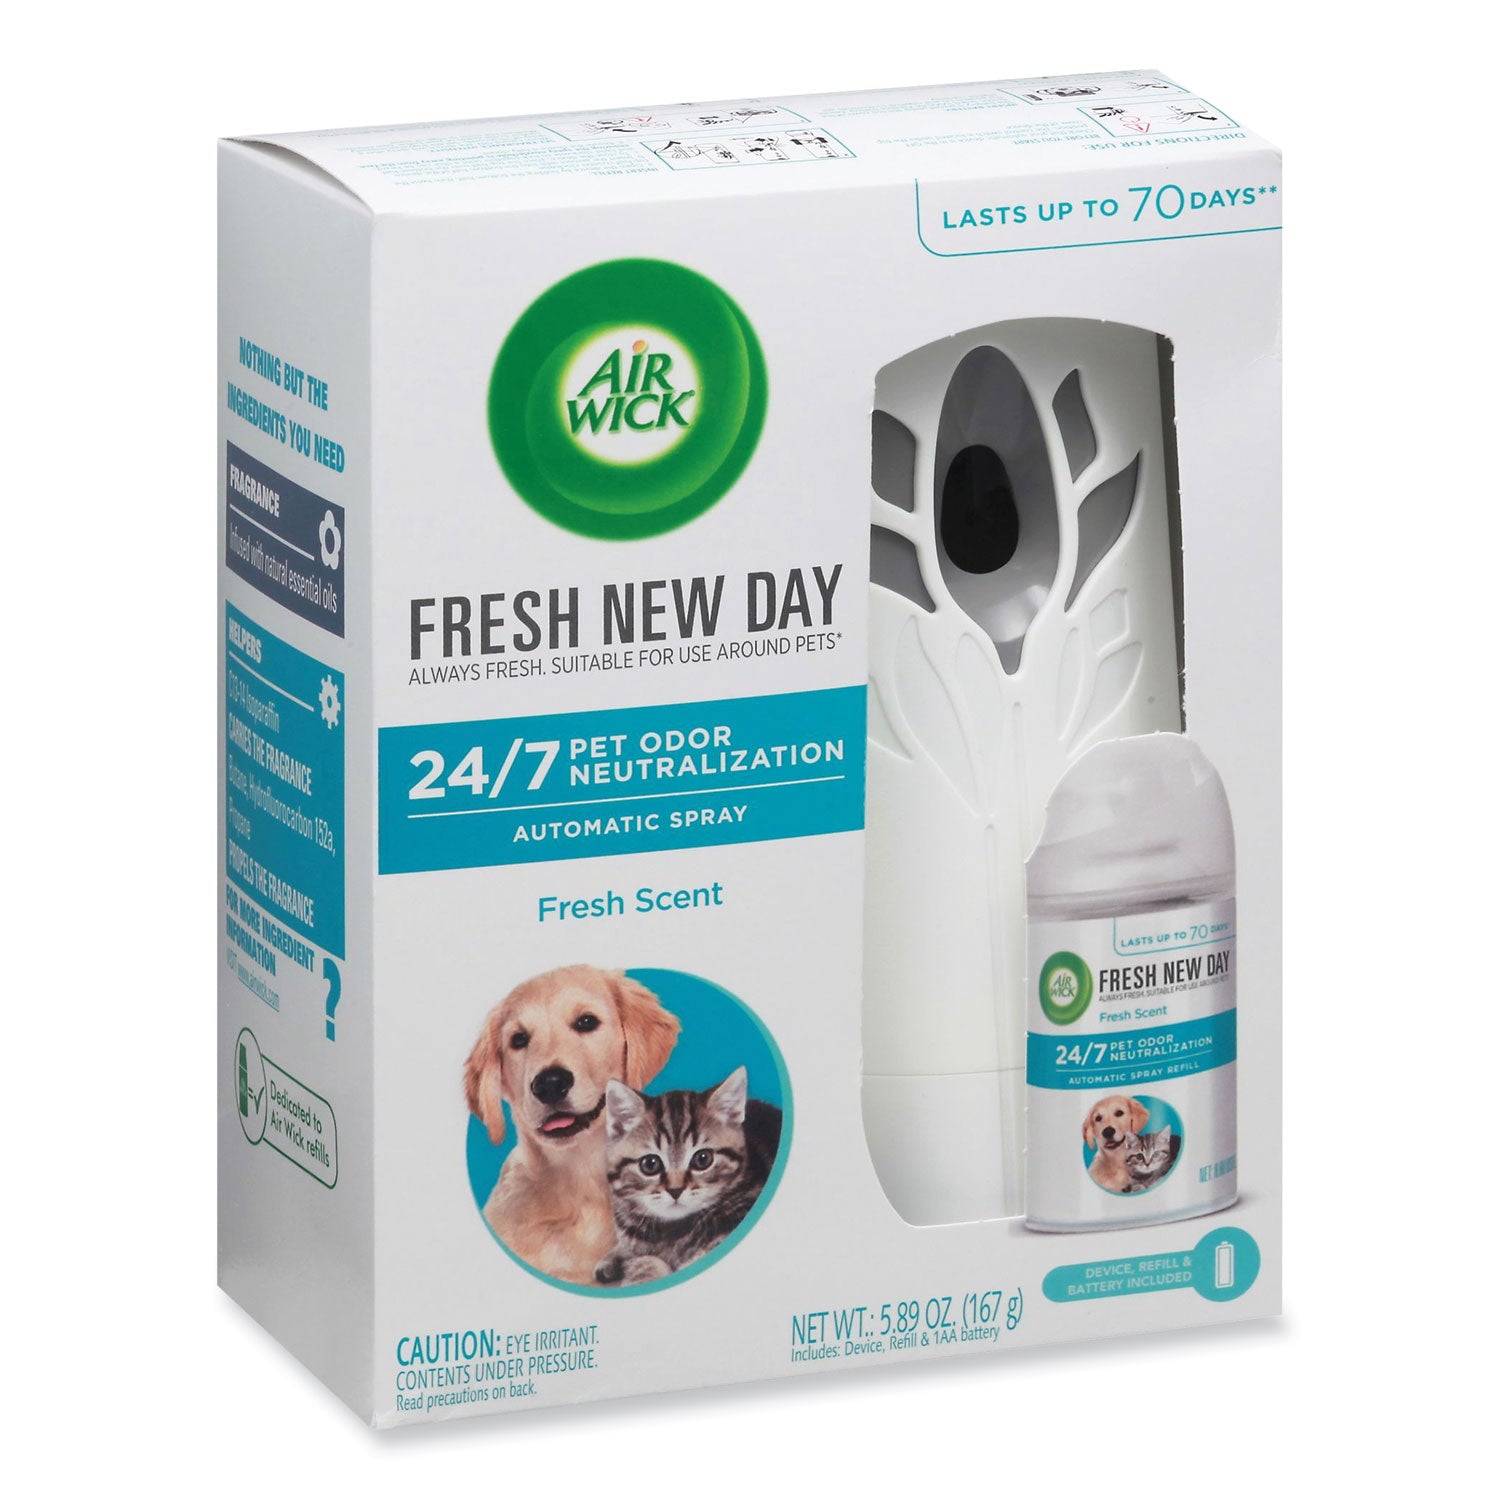 pet-odor-neutralization-automatic-spray-starter-kit-6-x-225-x-775-white-gray-4-carton_rac02720ct - 2